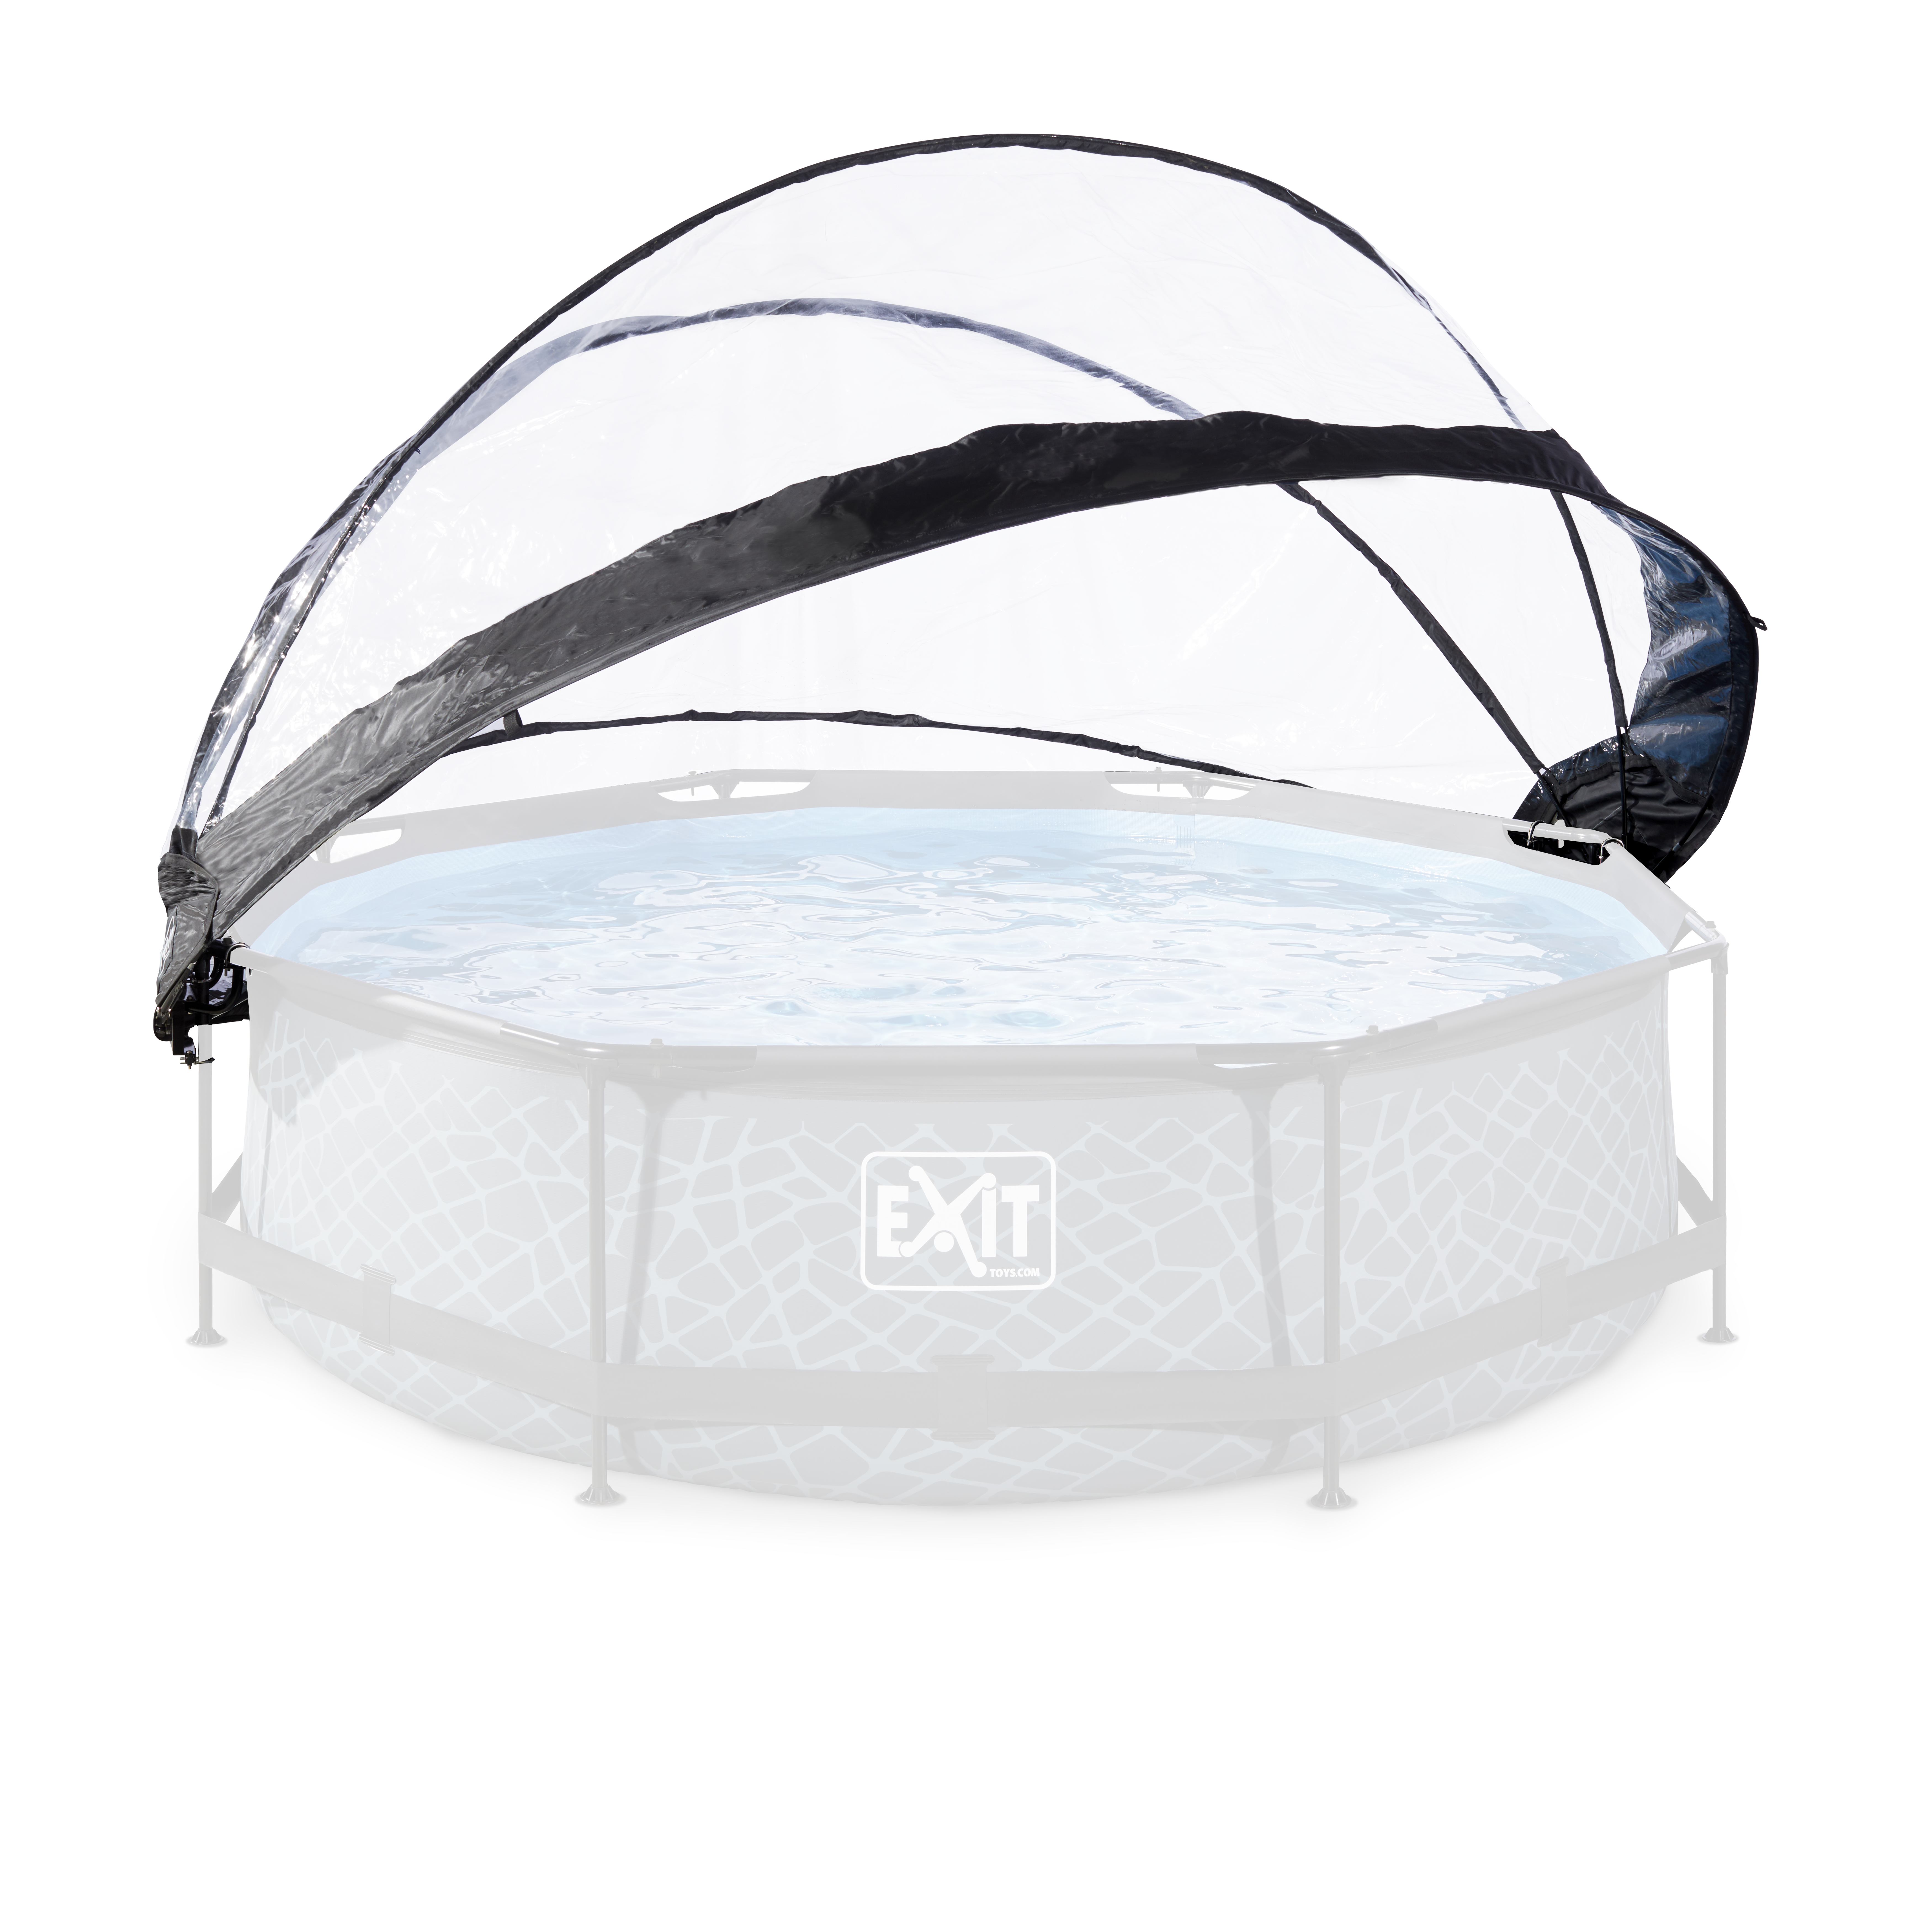 Oferta Gimnasia Carretilla Cubierta Dome para piscina desmontable Ø360cm - Outlet Piscinas